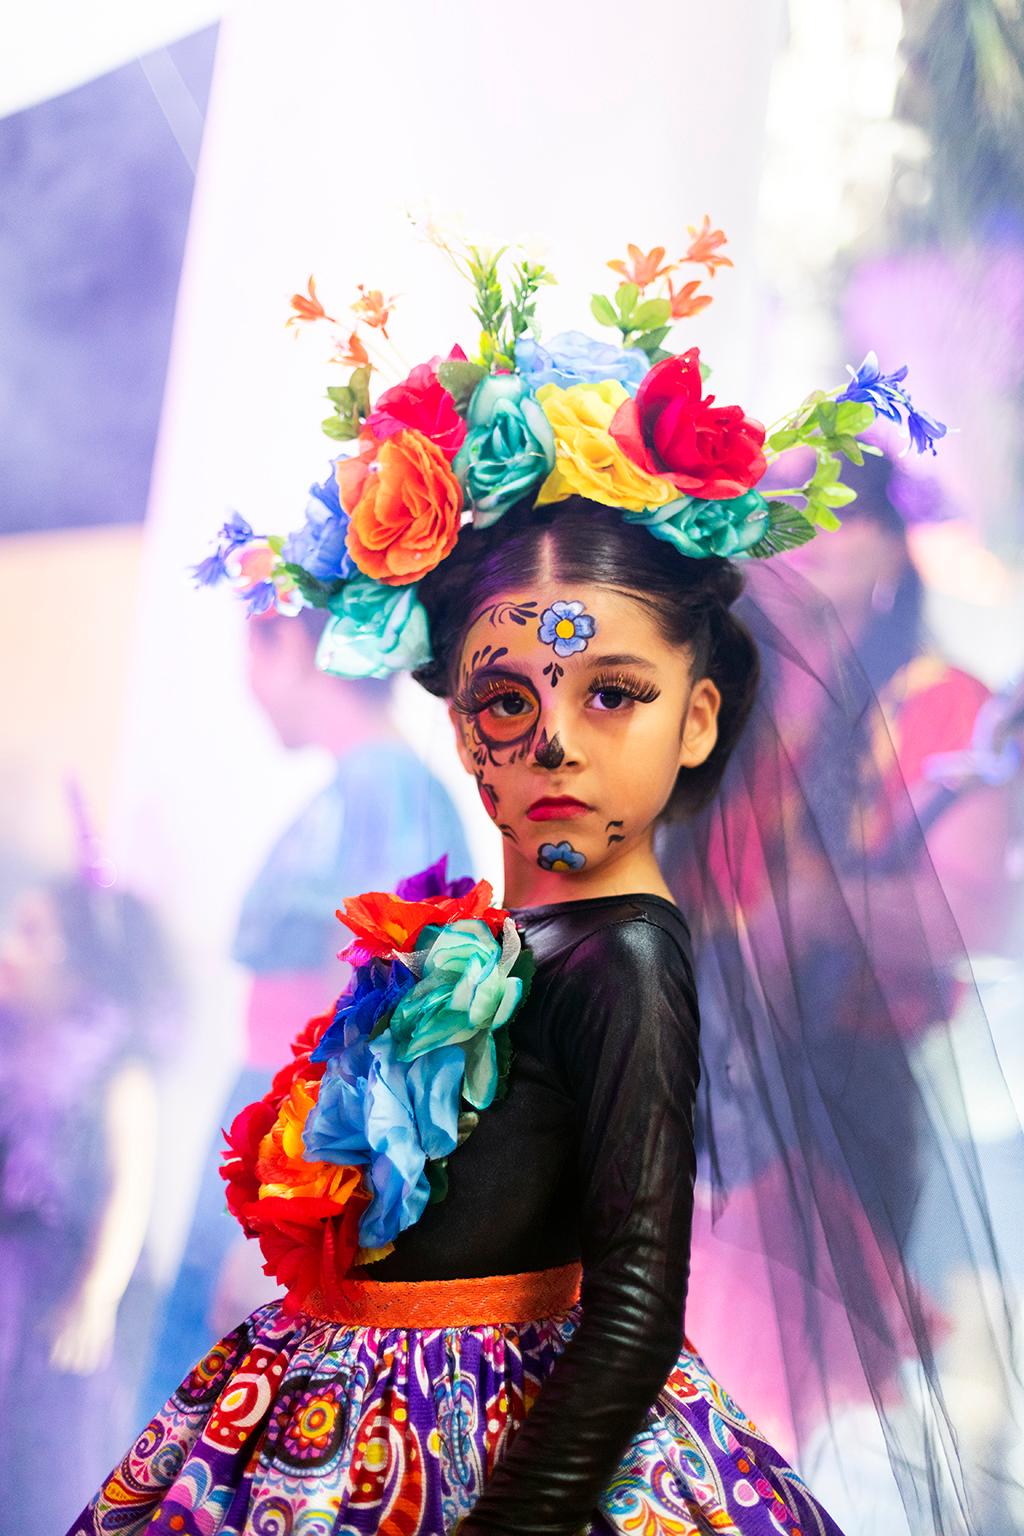  Cosmo Condina Color Photograph -  She has attitude! Dressed for Day of the Dead, Dia de los Muertos, Mexico, 2023